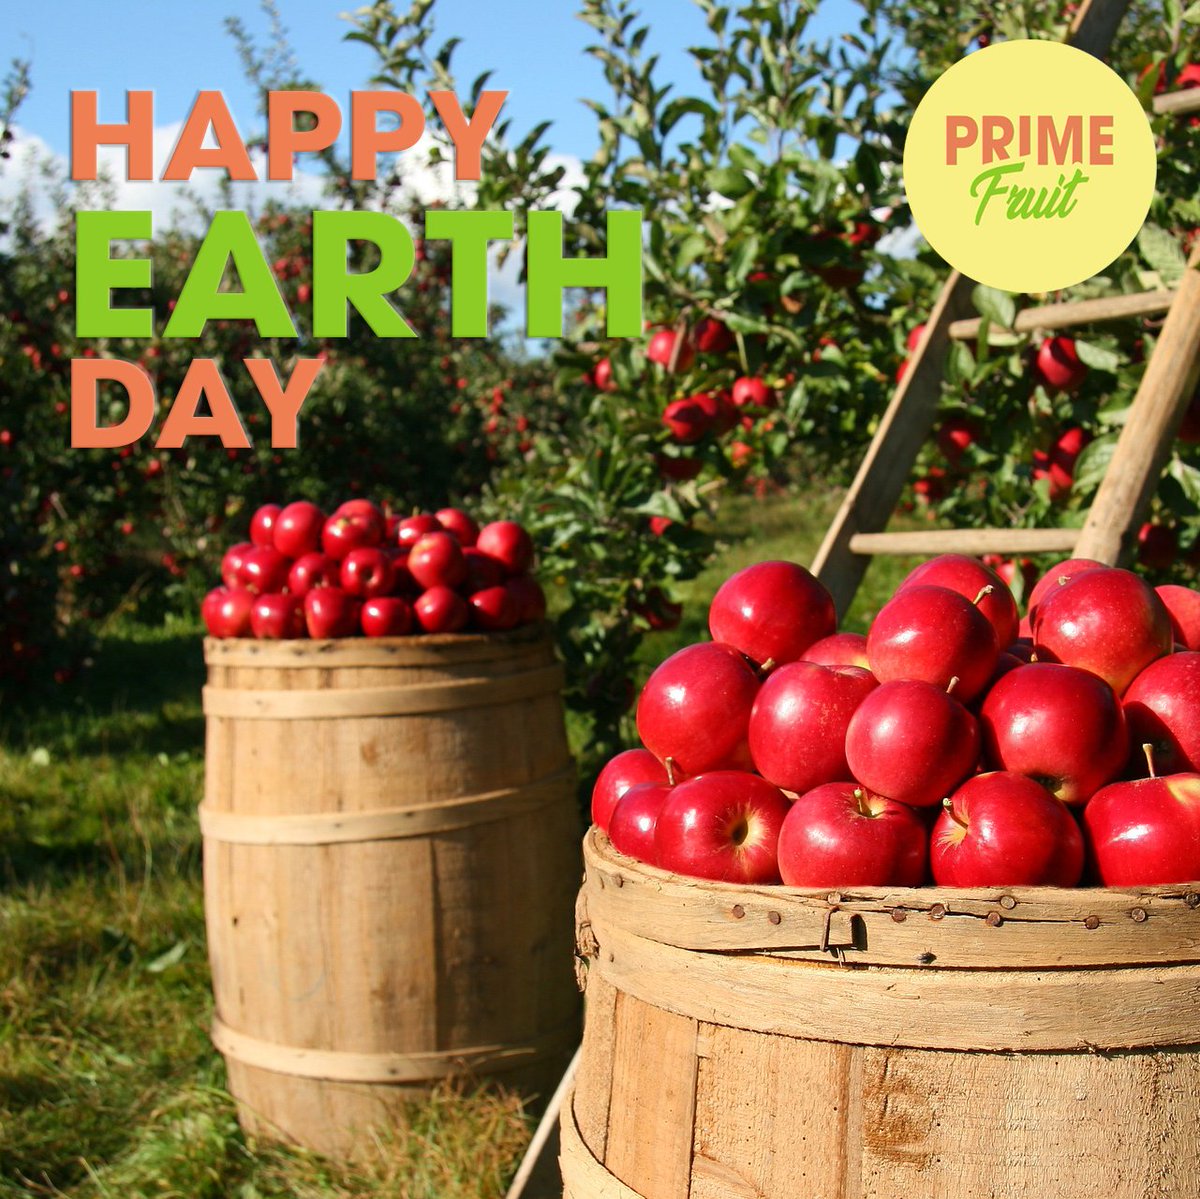 Happy Earth Day!
Enjoy all of the juicy #fruits the #Earth has to offer!

#PrimeFruitUAE  
#DubaiFood #DubaiFoodie 
#MyDubai #Alaweerfruitandvegetablemarket #Talabat
#FruitDelivery #DubaiFruitDelivery #HealthyOffice #HealthyWorkplace #EarthDay #EarthDay2020